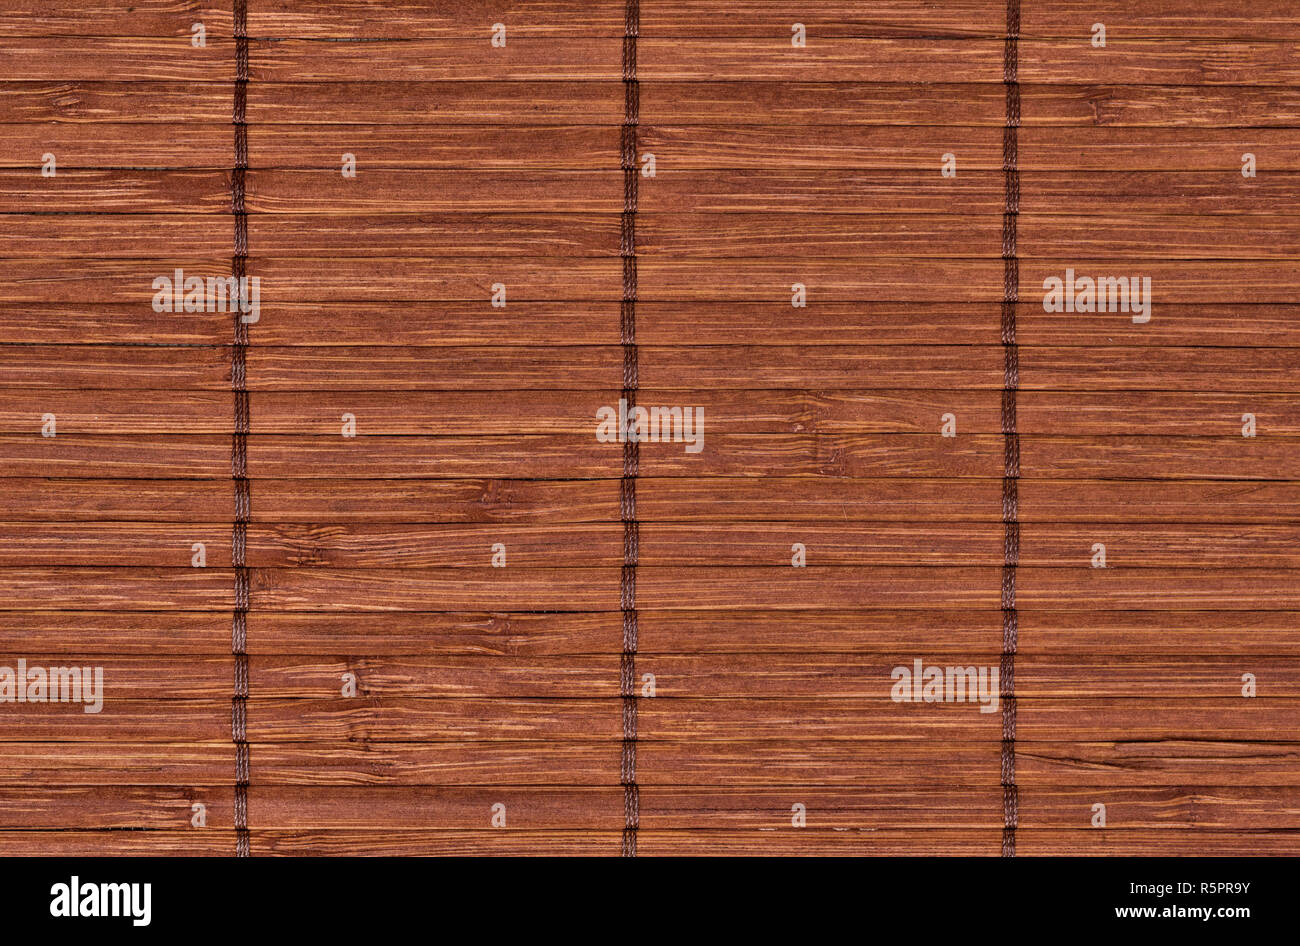 place mat made of bamboo Stock Photo